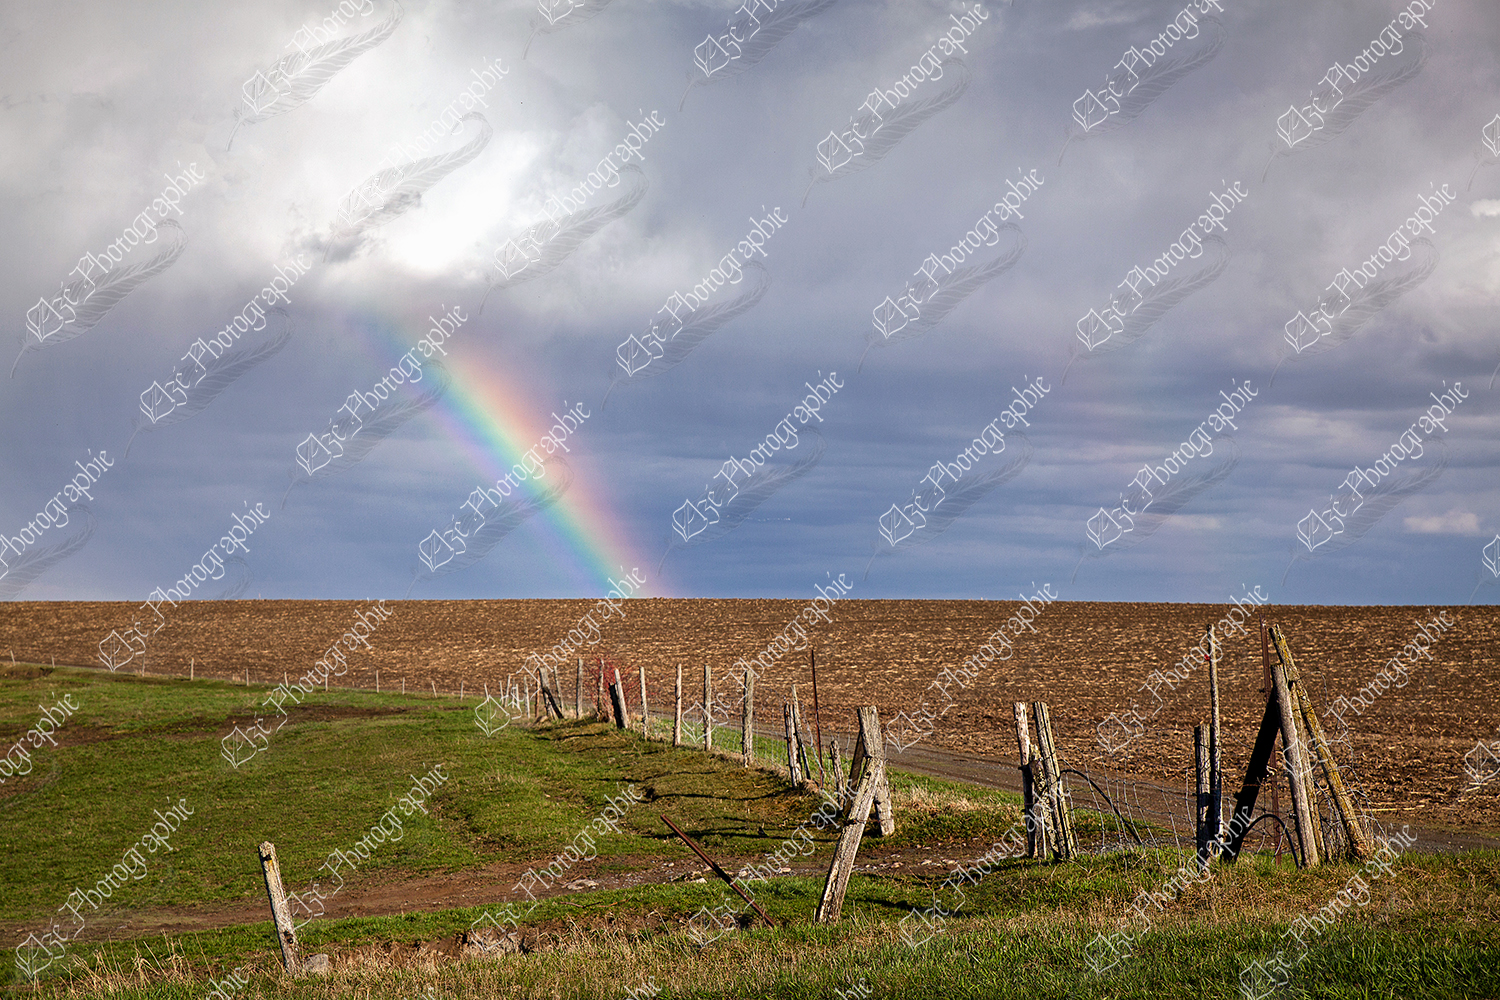 elze_photo_8635_campagne_champ_automne_rainbow_pasture